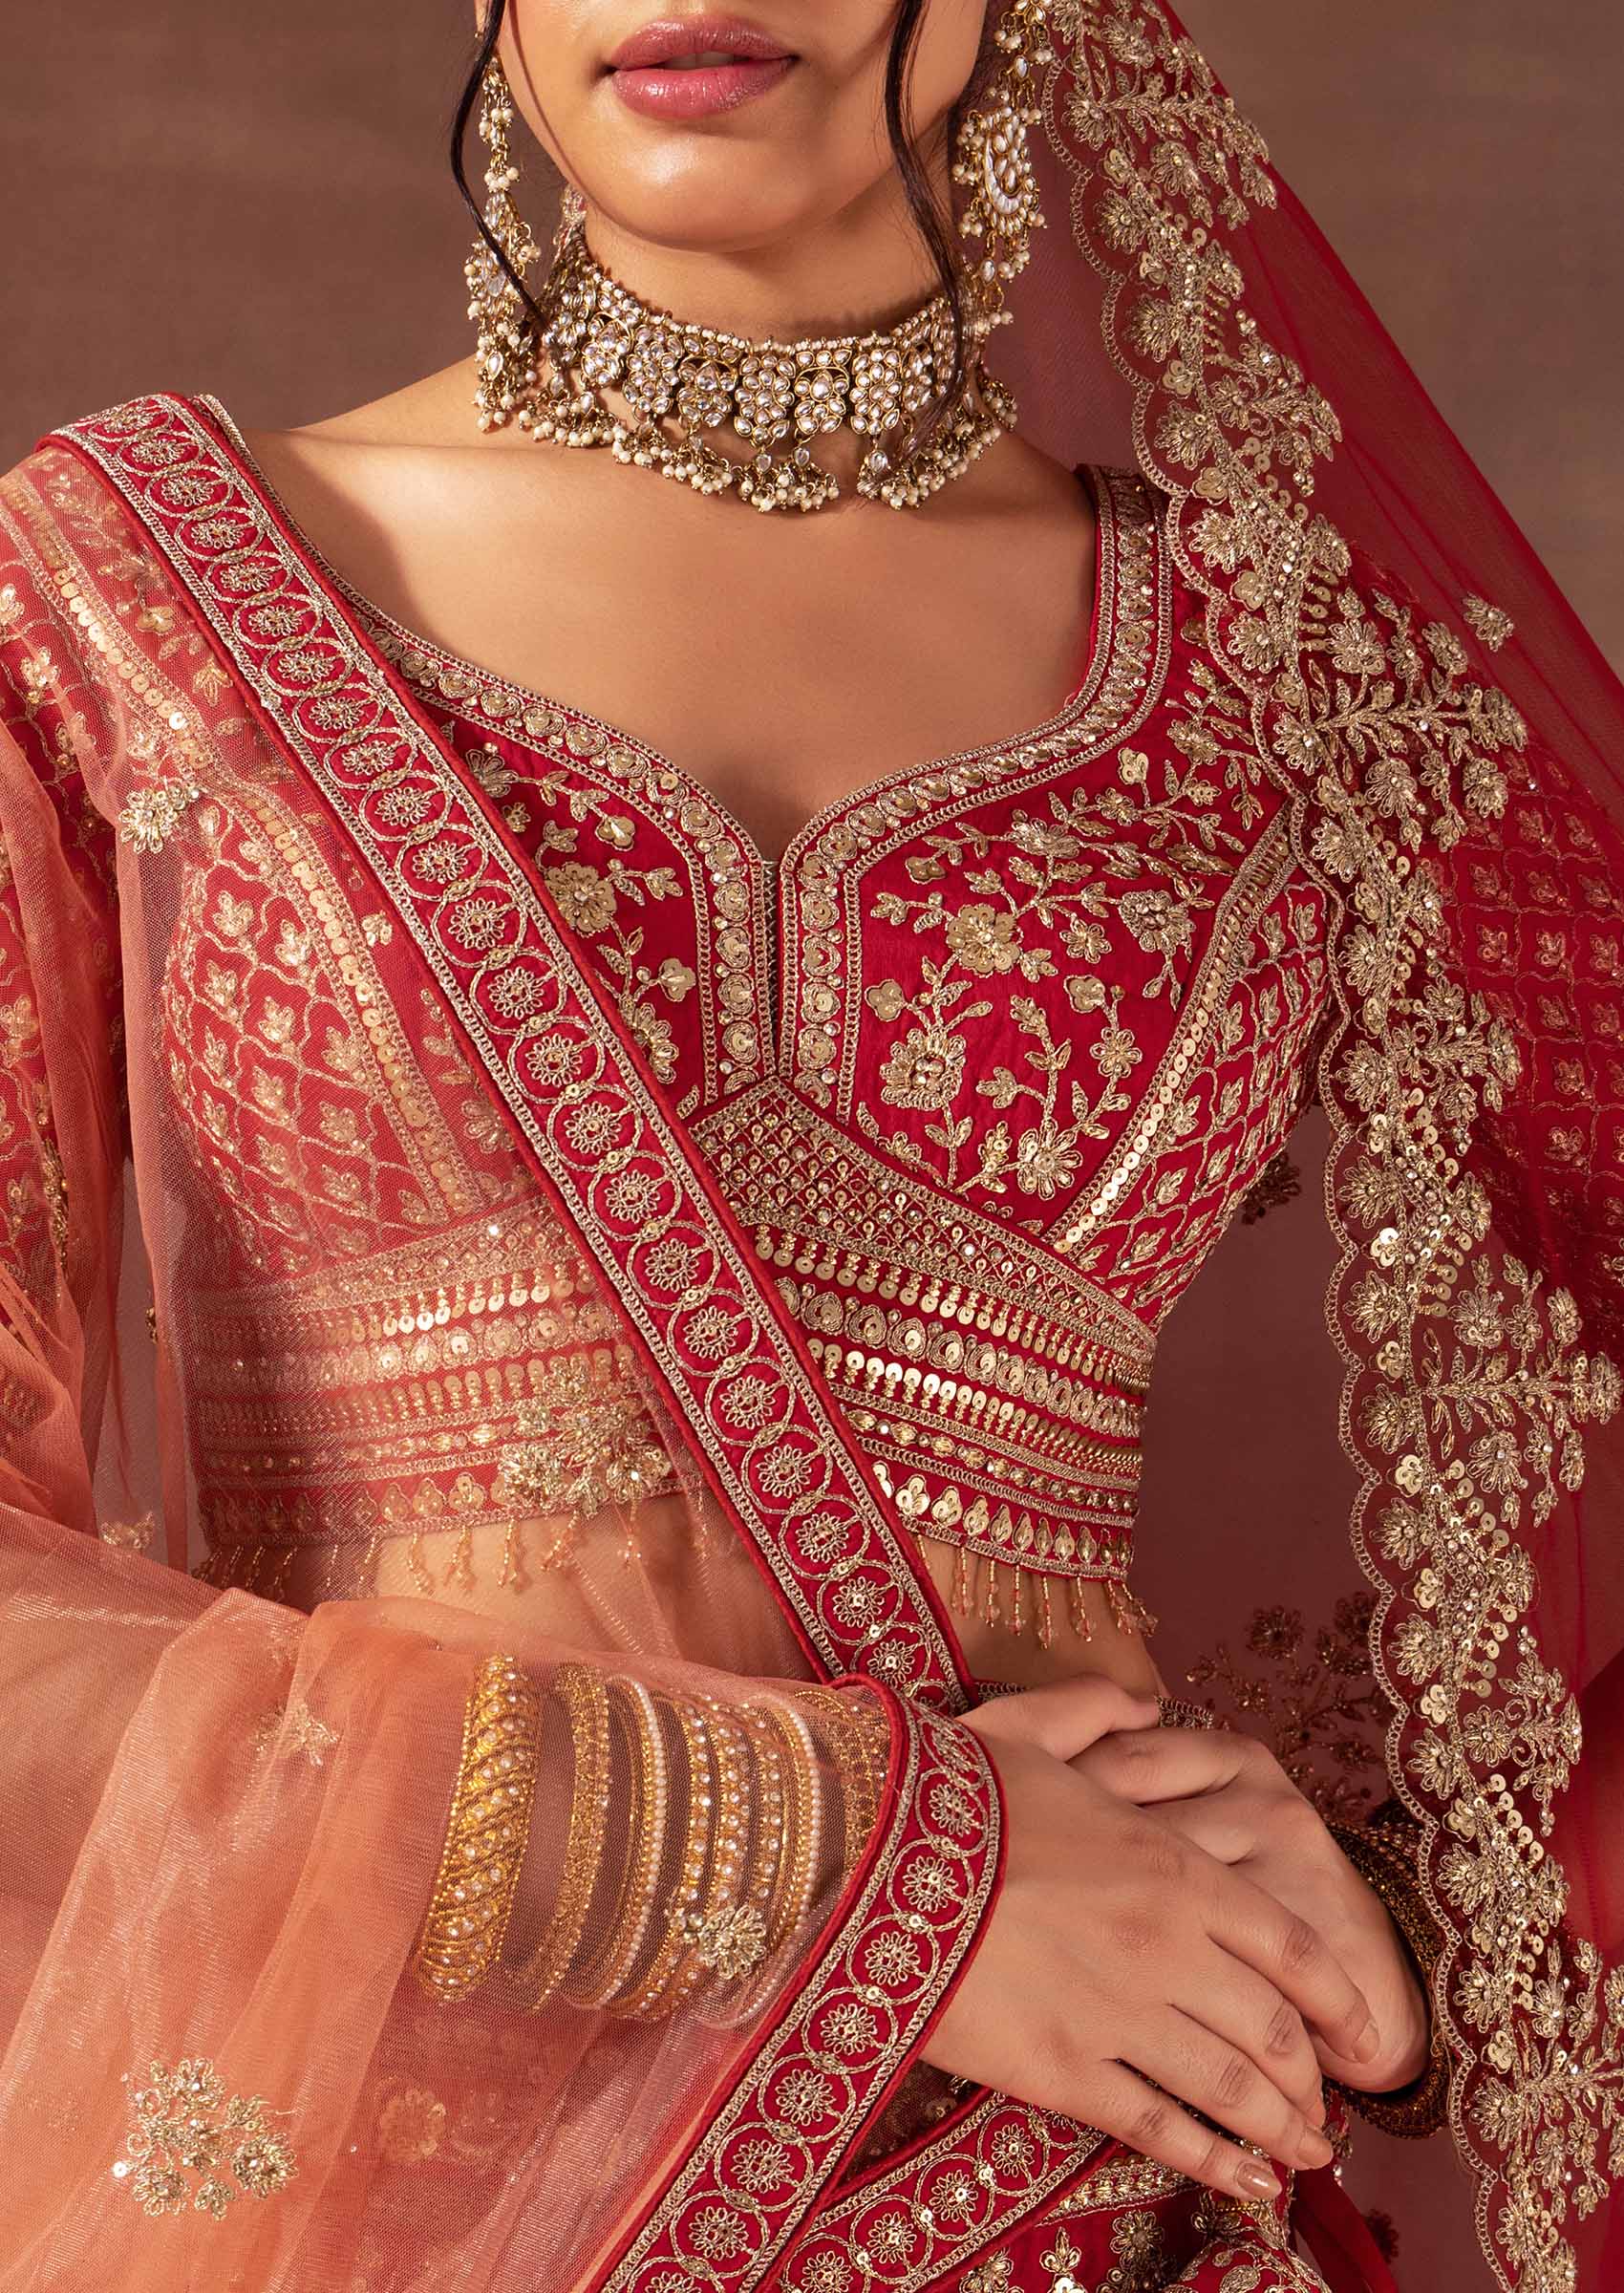 Buy Second Hand Heavy Bridal Lehenga for Wedding- Red | Fully Stitched Lehenga  Choli | Dry Cleaned Dress | Embroidery Lehanga | Ghagra Choli for Women at  Amazon.in